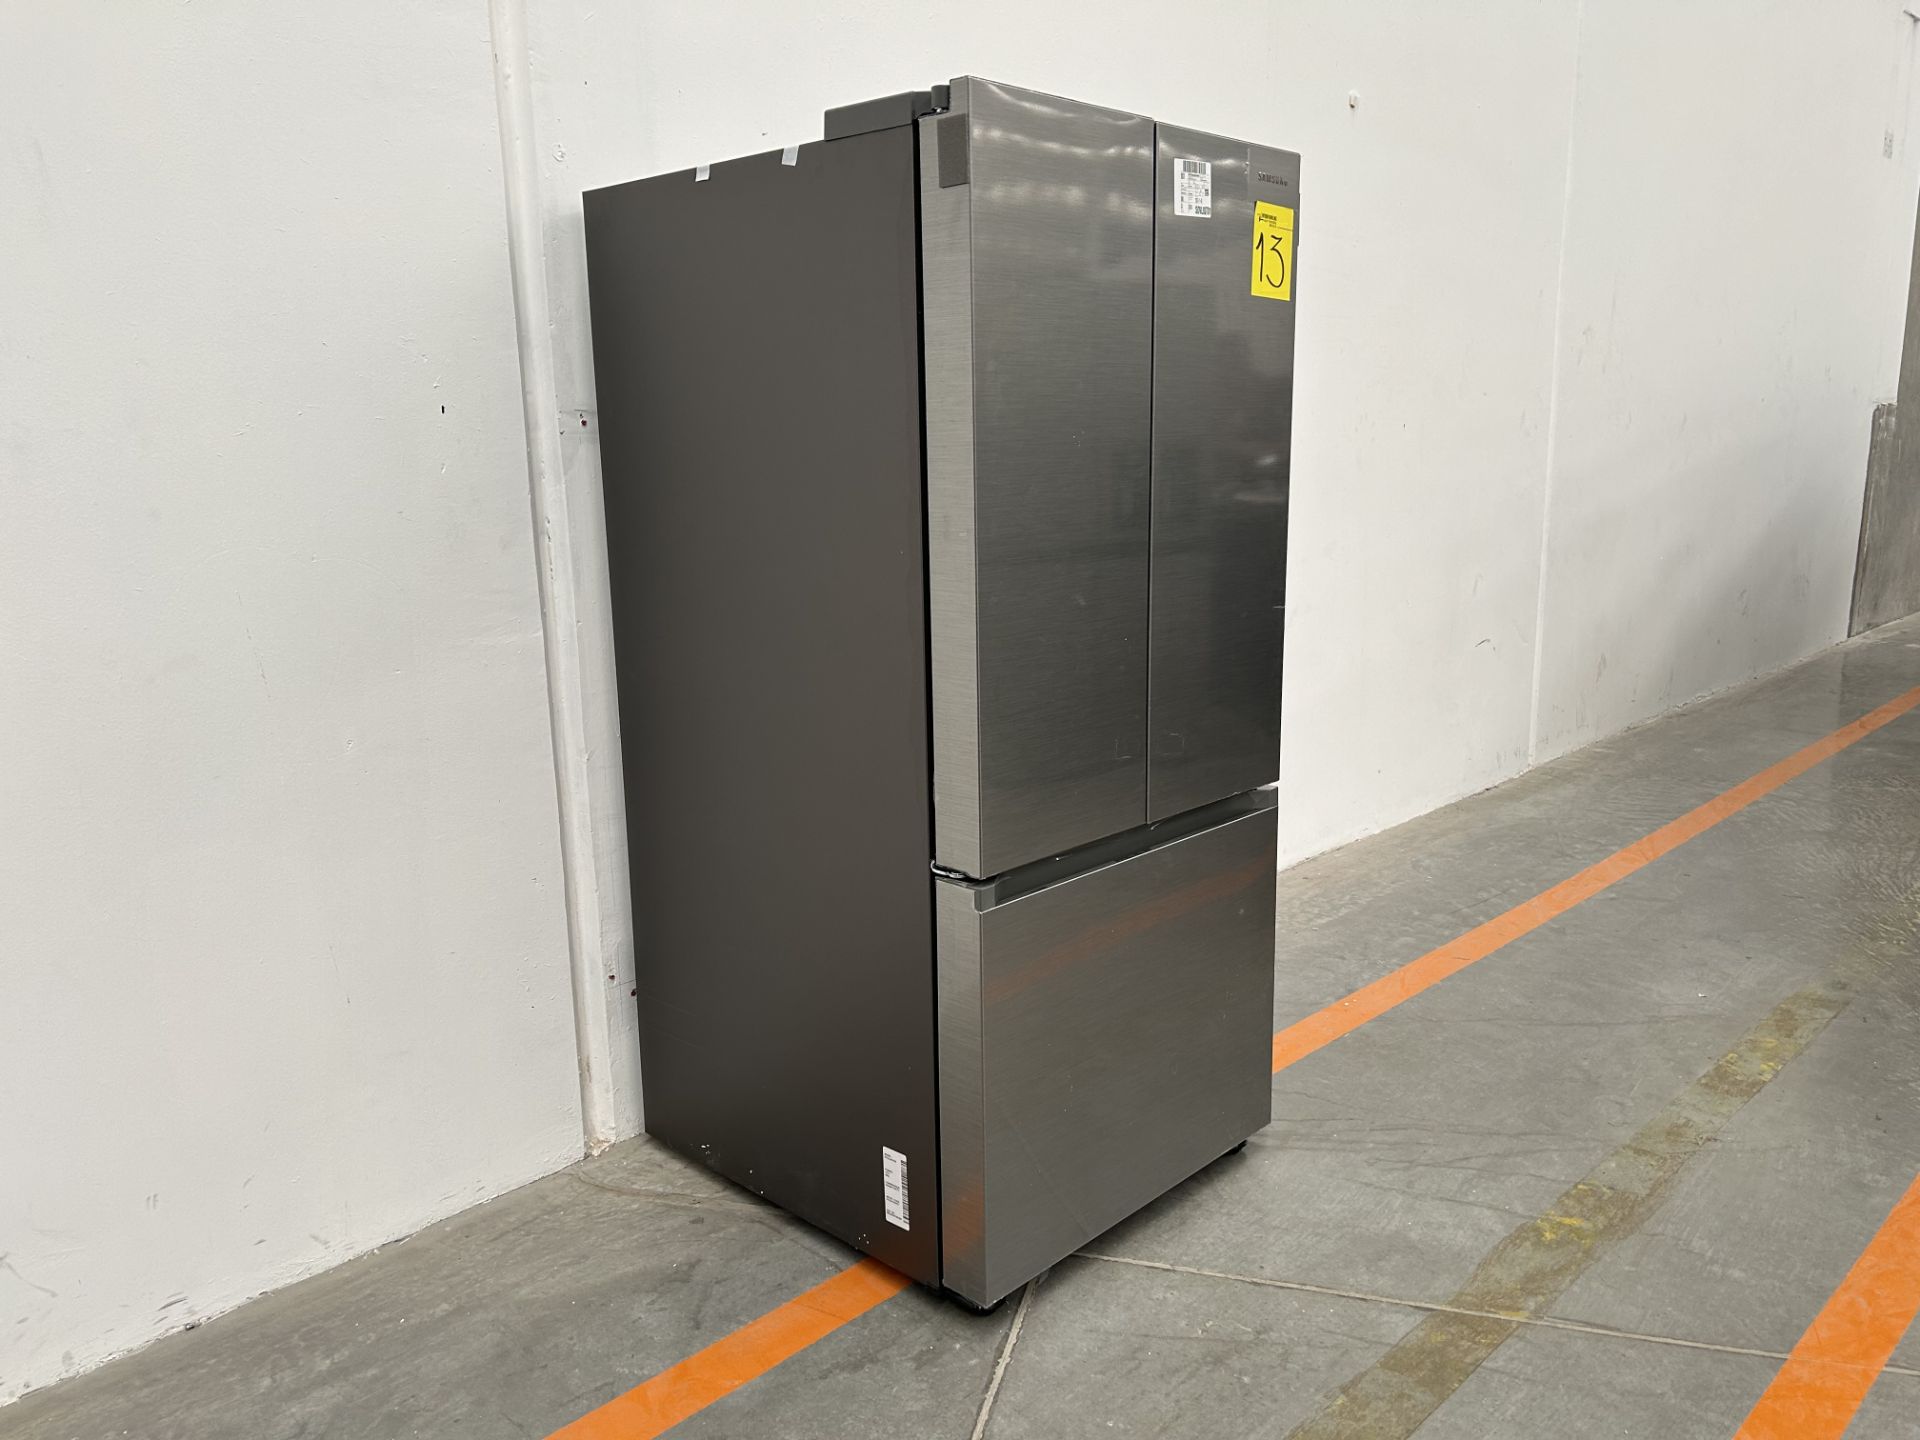 (NUEVO) Refrigerador Marca SAMSUNG, Modelo RF22A4010S9, Serie 00109H, Color GRIS - Image 3 of 4